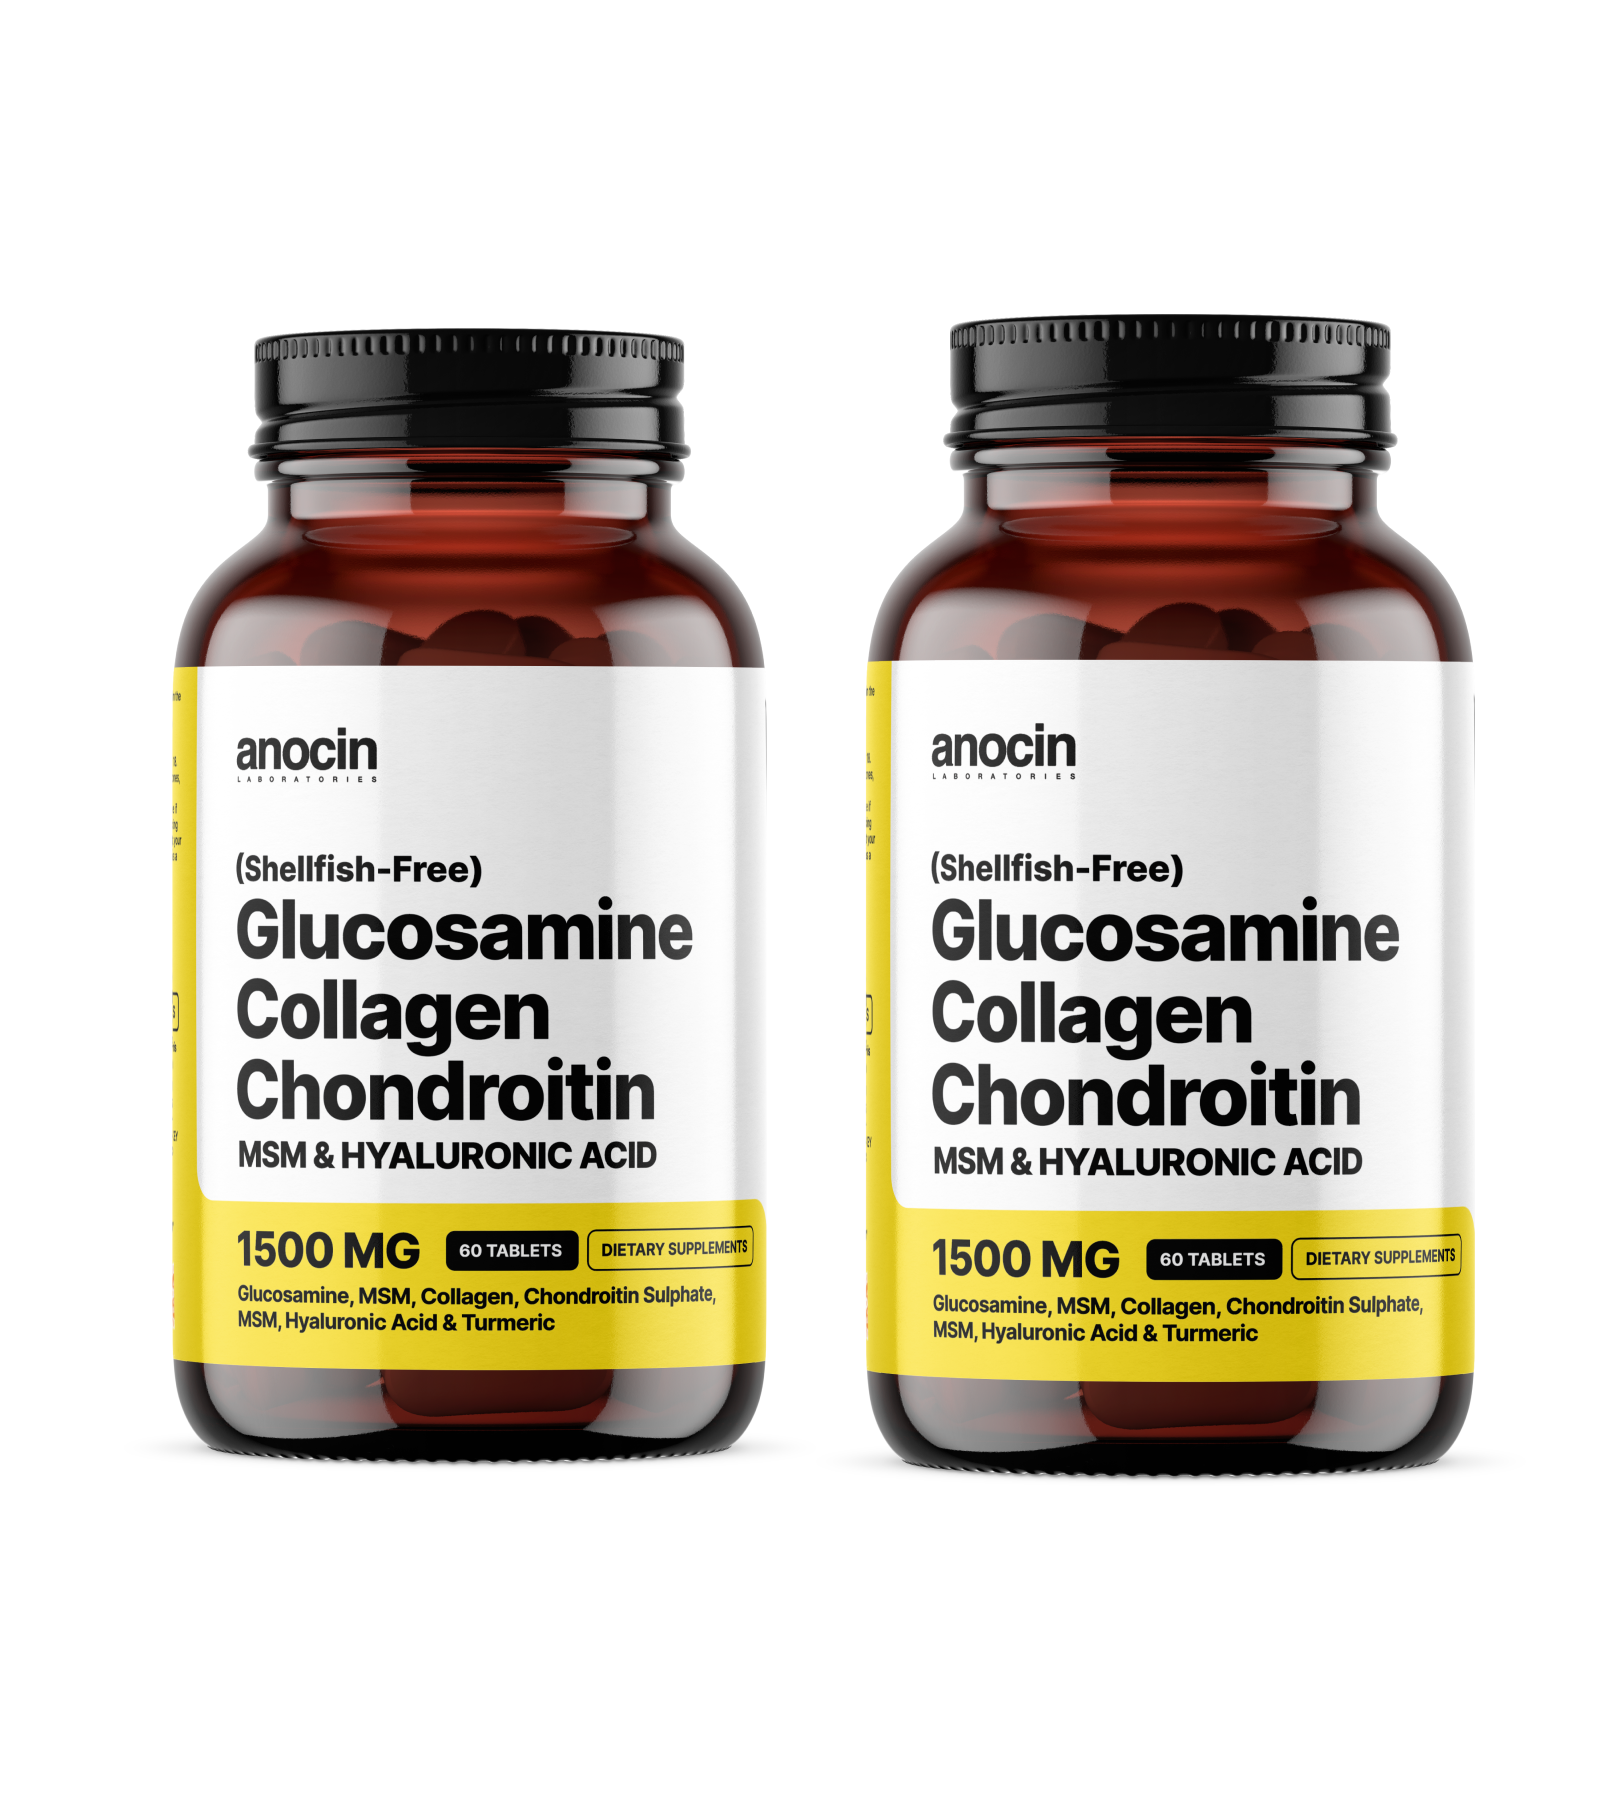 1500 mg Glucosamine, Collagen, Chondroitin, MSM, Hyaluronic Acid & Curcumin (Turmeric)